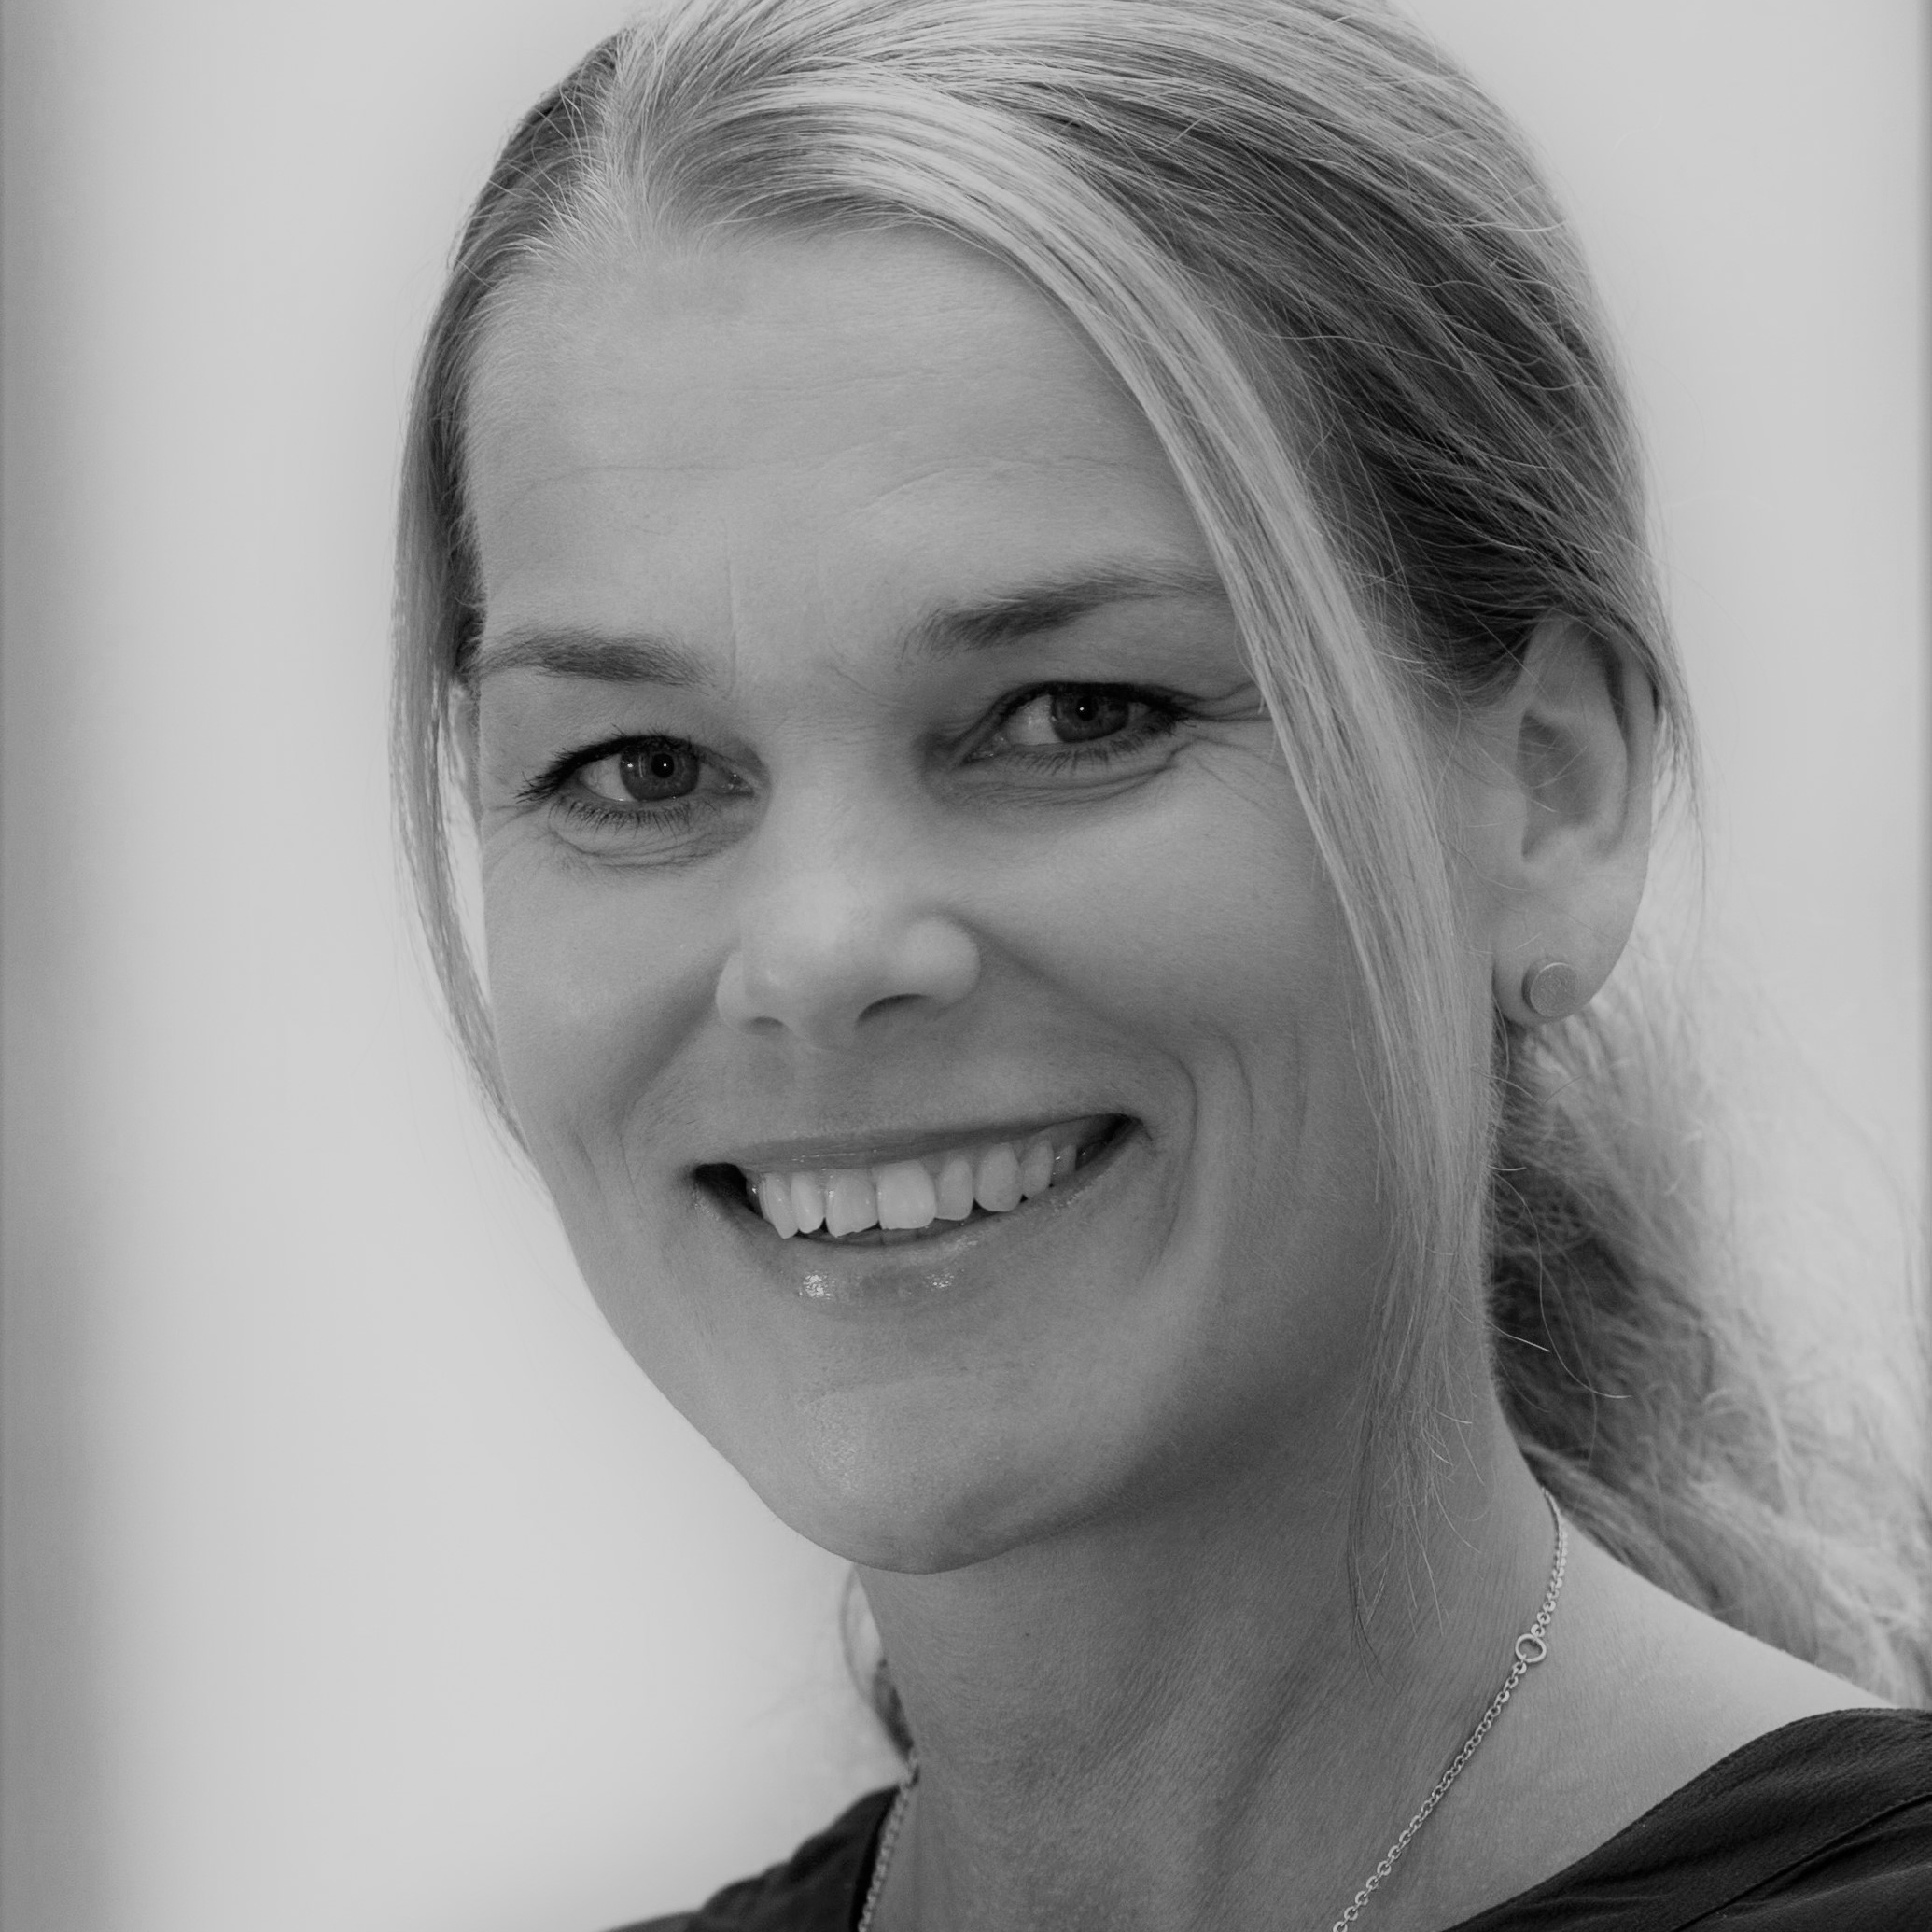 Susanne Sandgren, Processledare social hållbarhet/ folkhälsa och projektledare Fullföljda studier Skaraborg, 070-369 66 58, <a title="Susanne Sandgren" href="mailto:susanne.sandgren@skaraborg.se">susanne.sandgren@skaraborg.se</a>